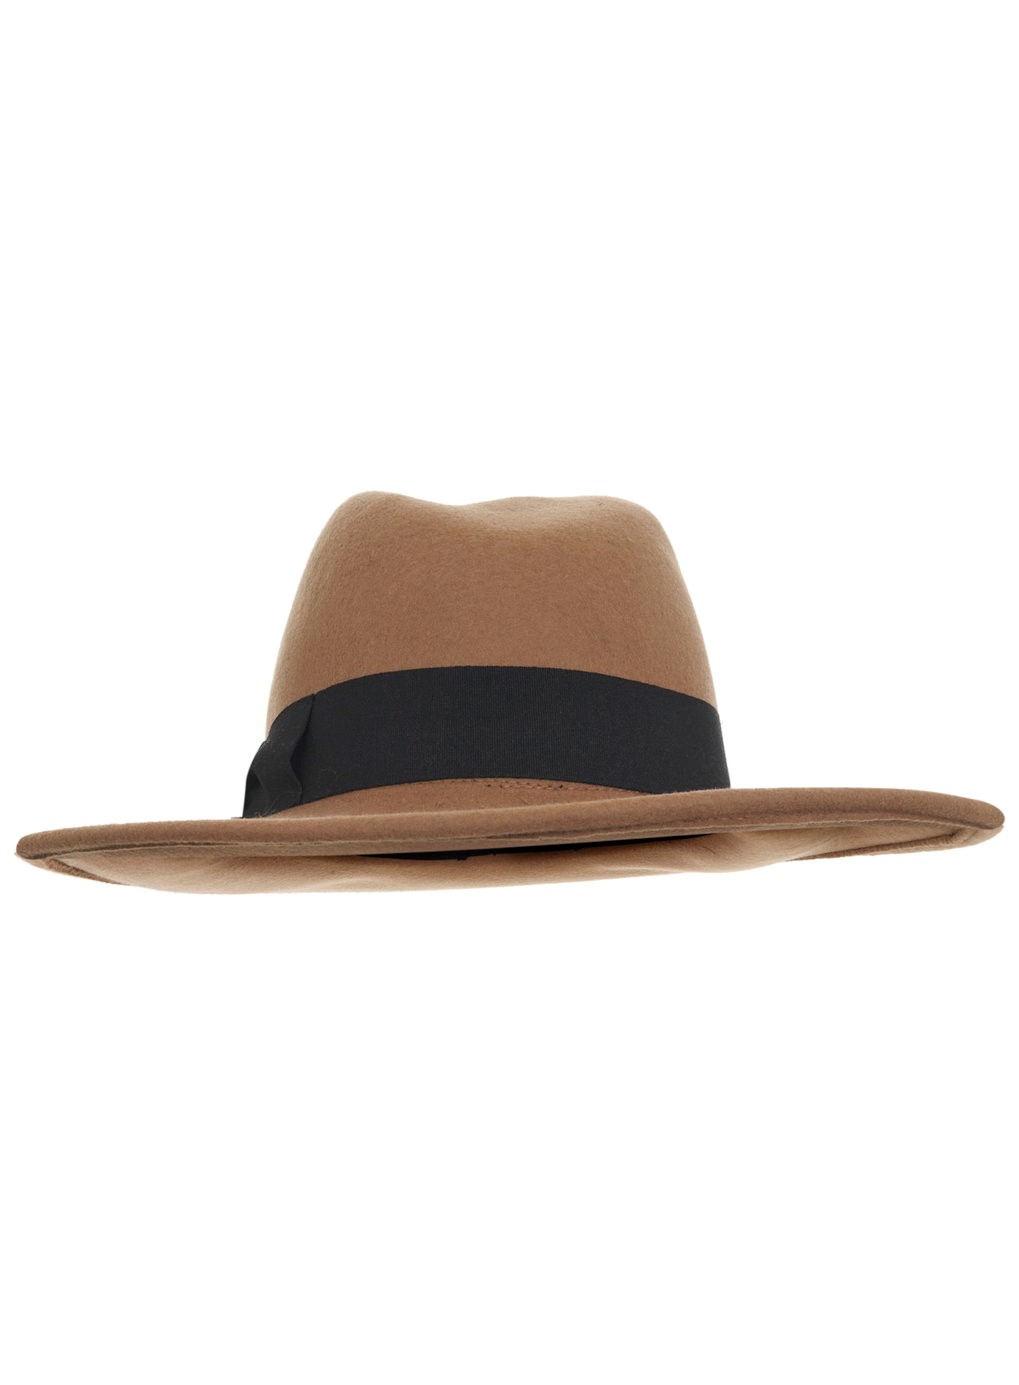 Miss Selfridge Camel Oversized Fedora Hat, £28